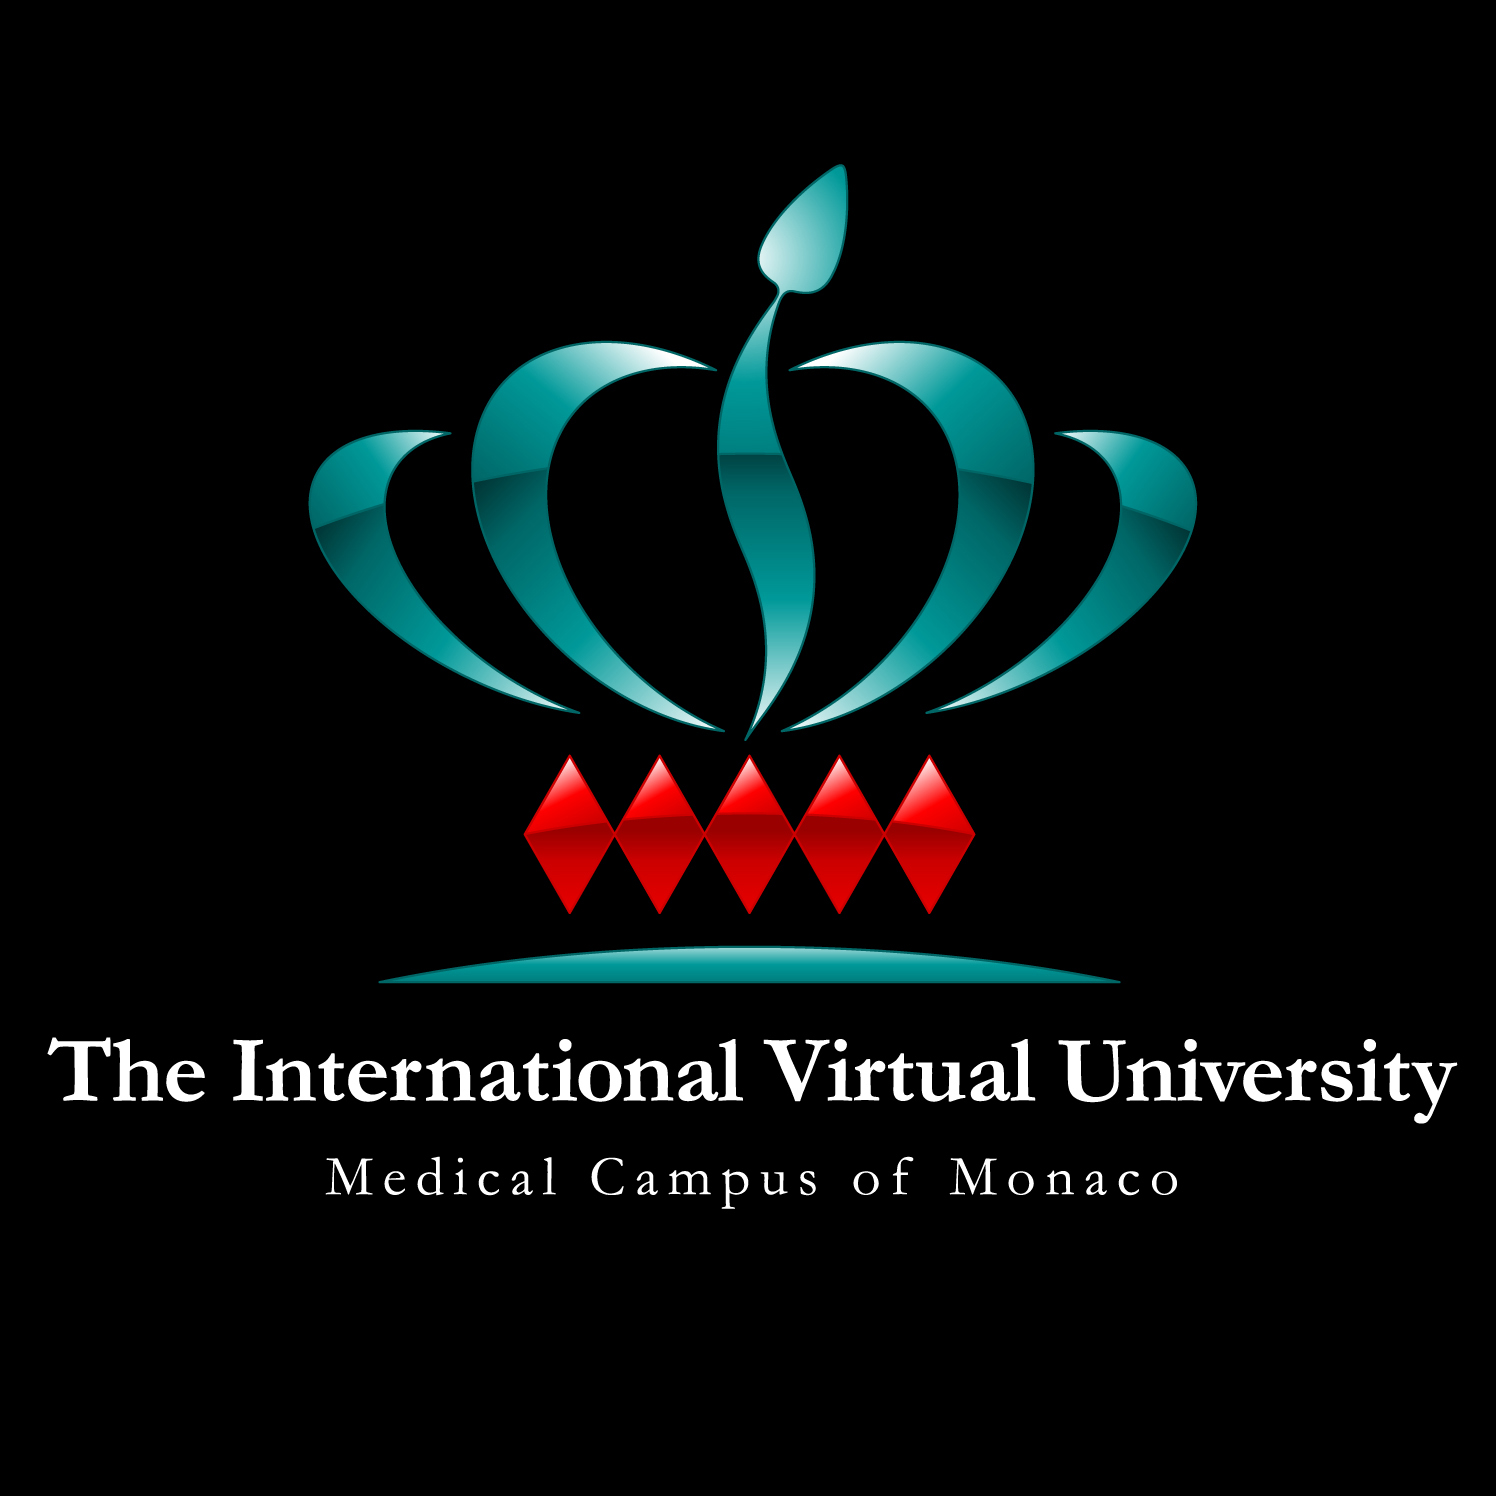 The International Virtual University